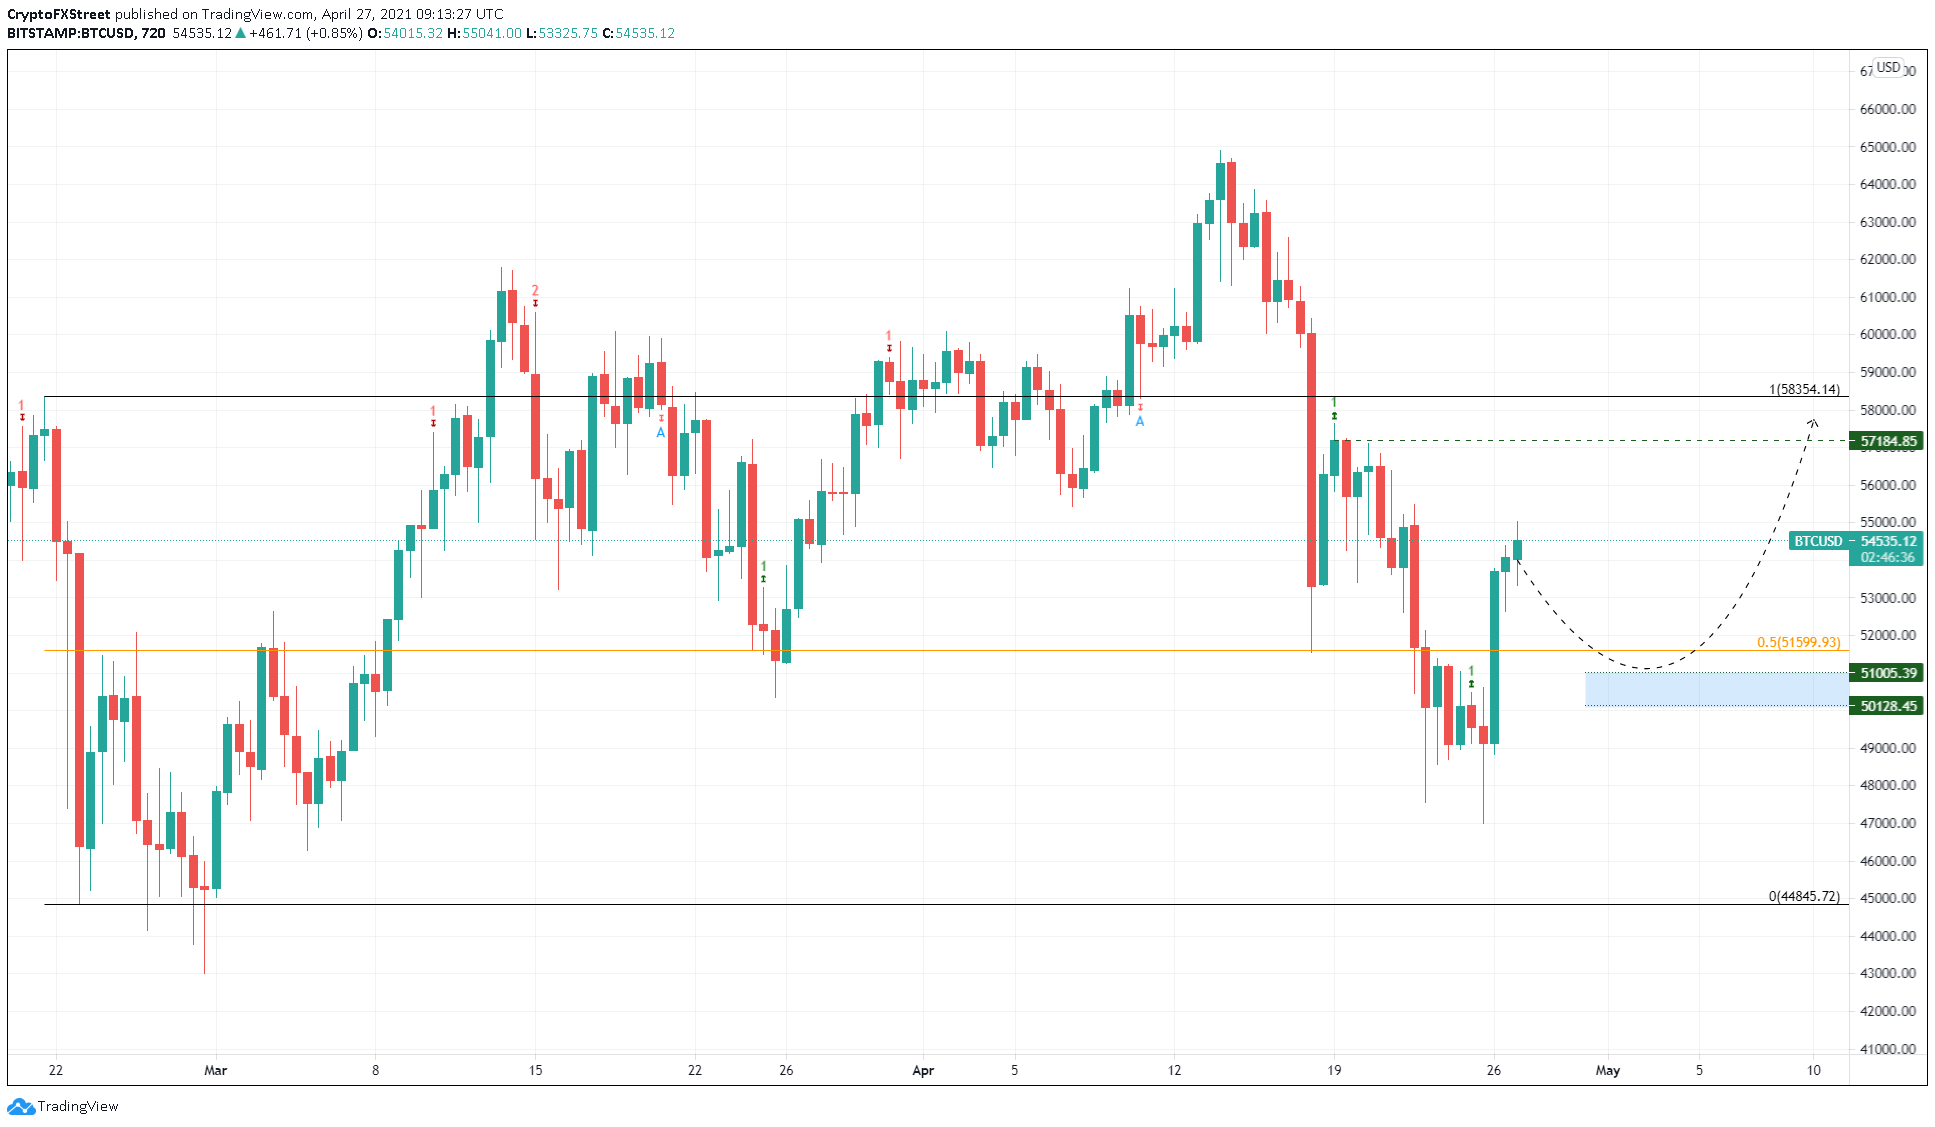 BTC/USD 12-hour chart